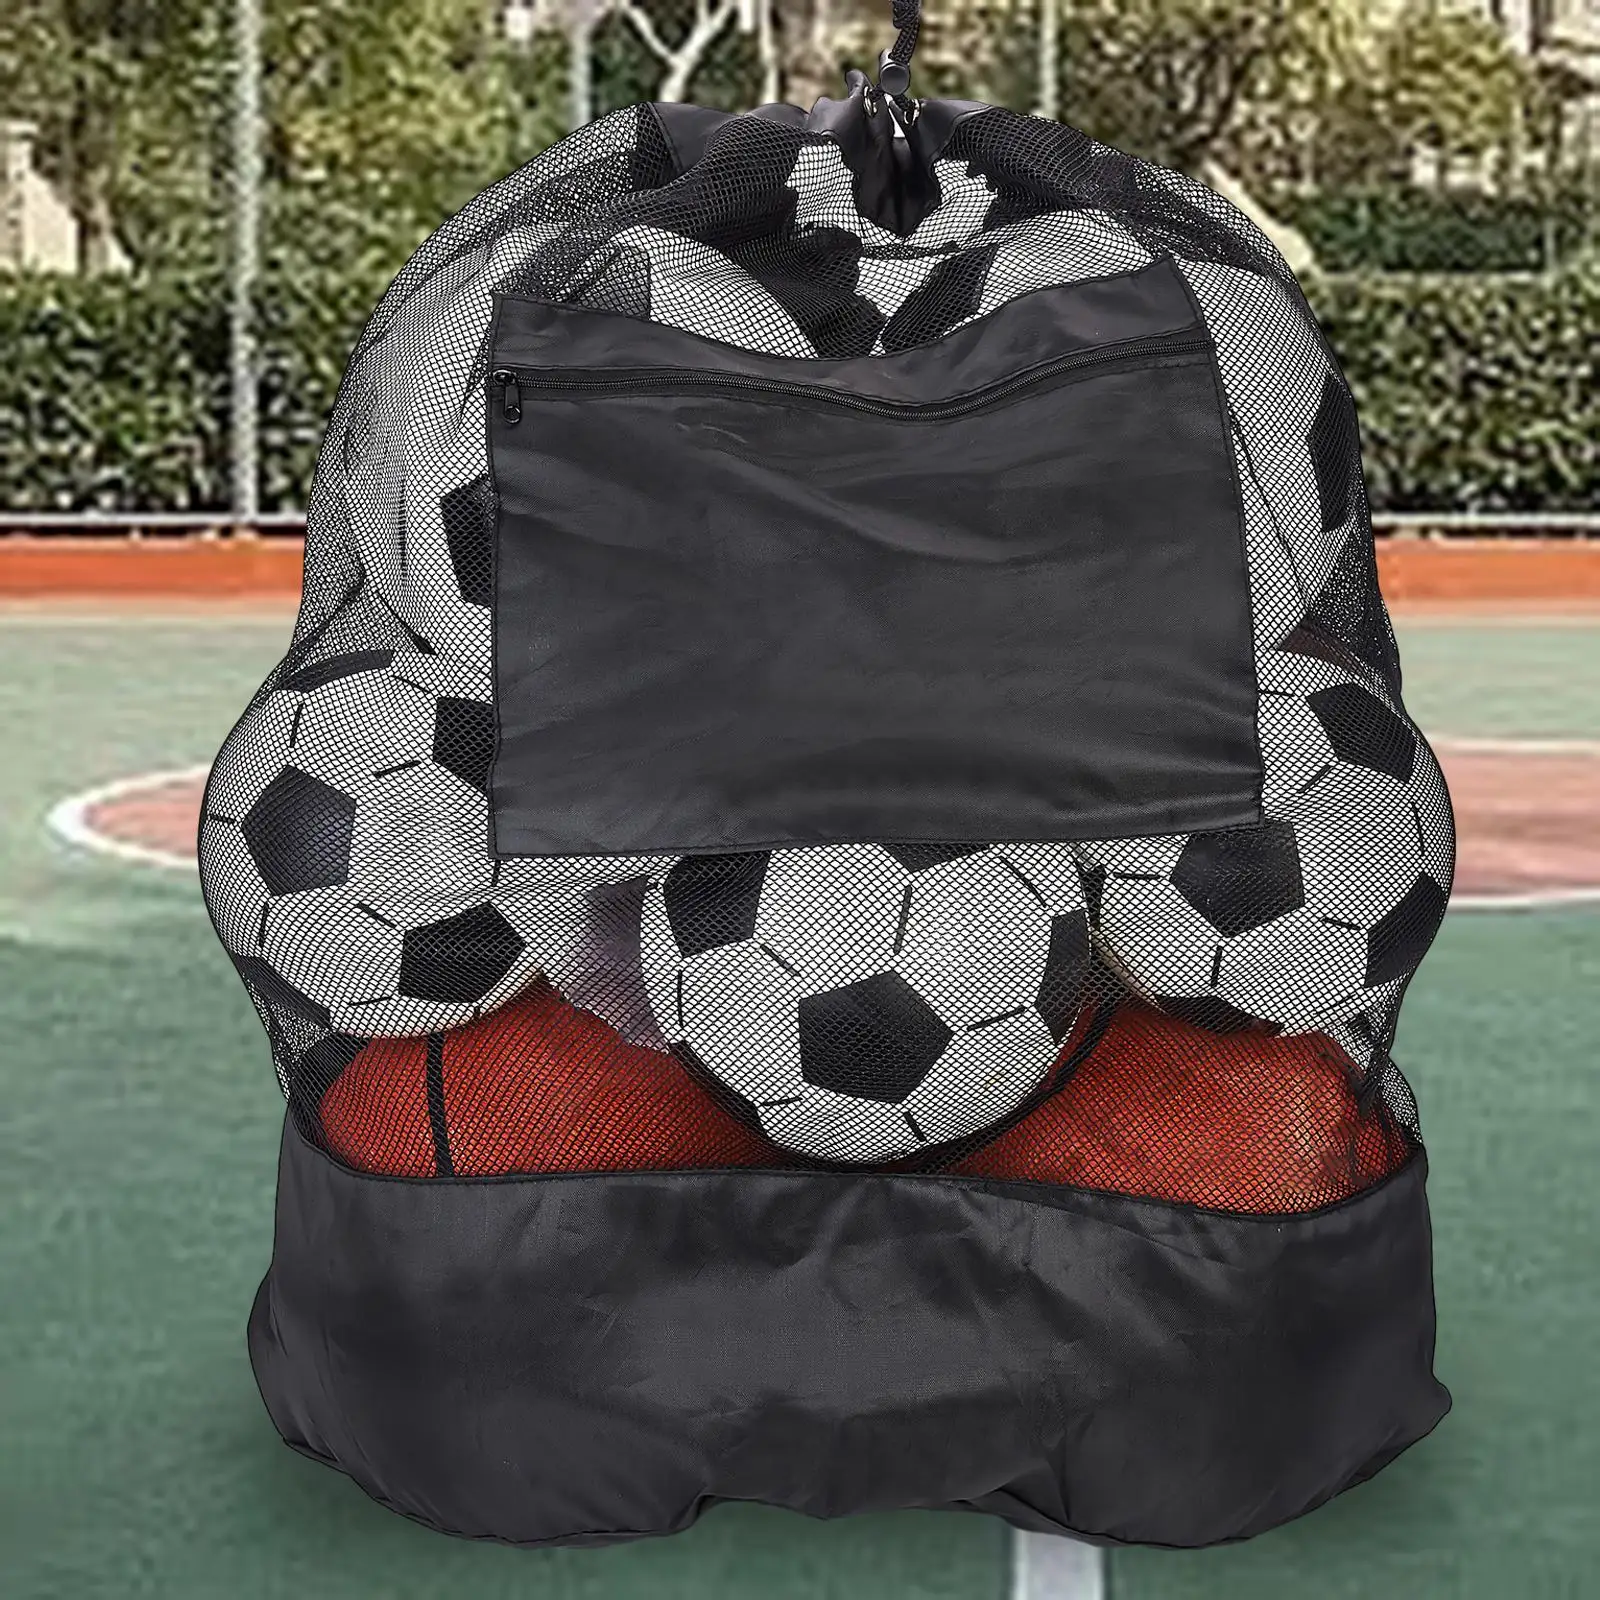 Soccer Ball Bag Sports Ball Mesh Bag, Soccer Team Balls Bag with Shoulder Strap, Drawstring Sport Storage Bag for Football